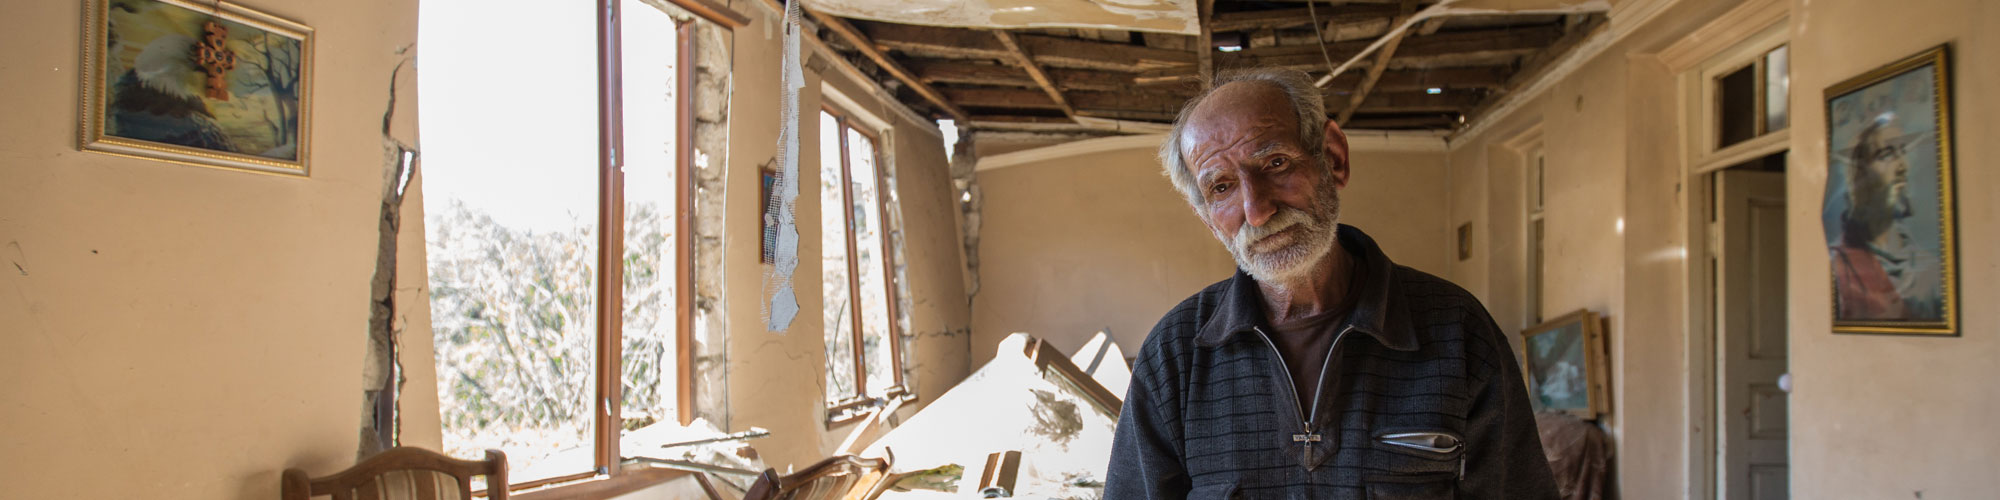 Nagorno Karabakh Conflict - Old Armenian man house destroyed by Azerbaijan bombing - War 2020 Artsakh (Nagorno Karabakh)